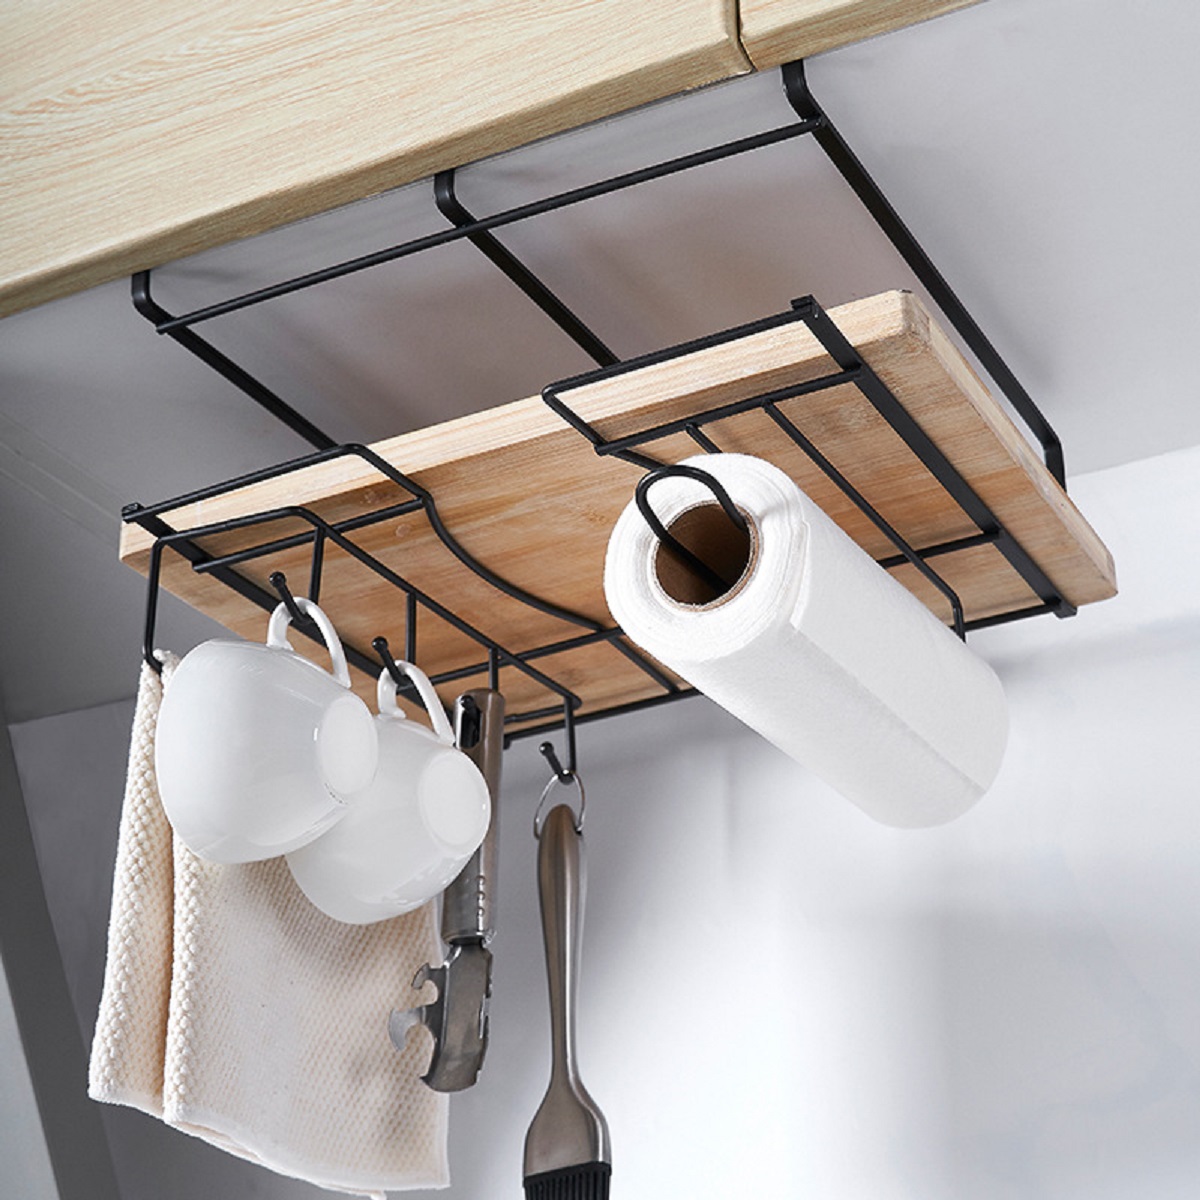 Metal-Hanging-Basket-Iron-BlackWhite-Hook-Design-Wall-Hanging-Rack-Kitchen-Bathroom-Towel-Knife-Stor-1776553-10